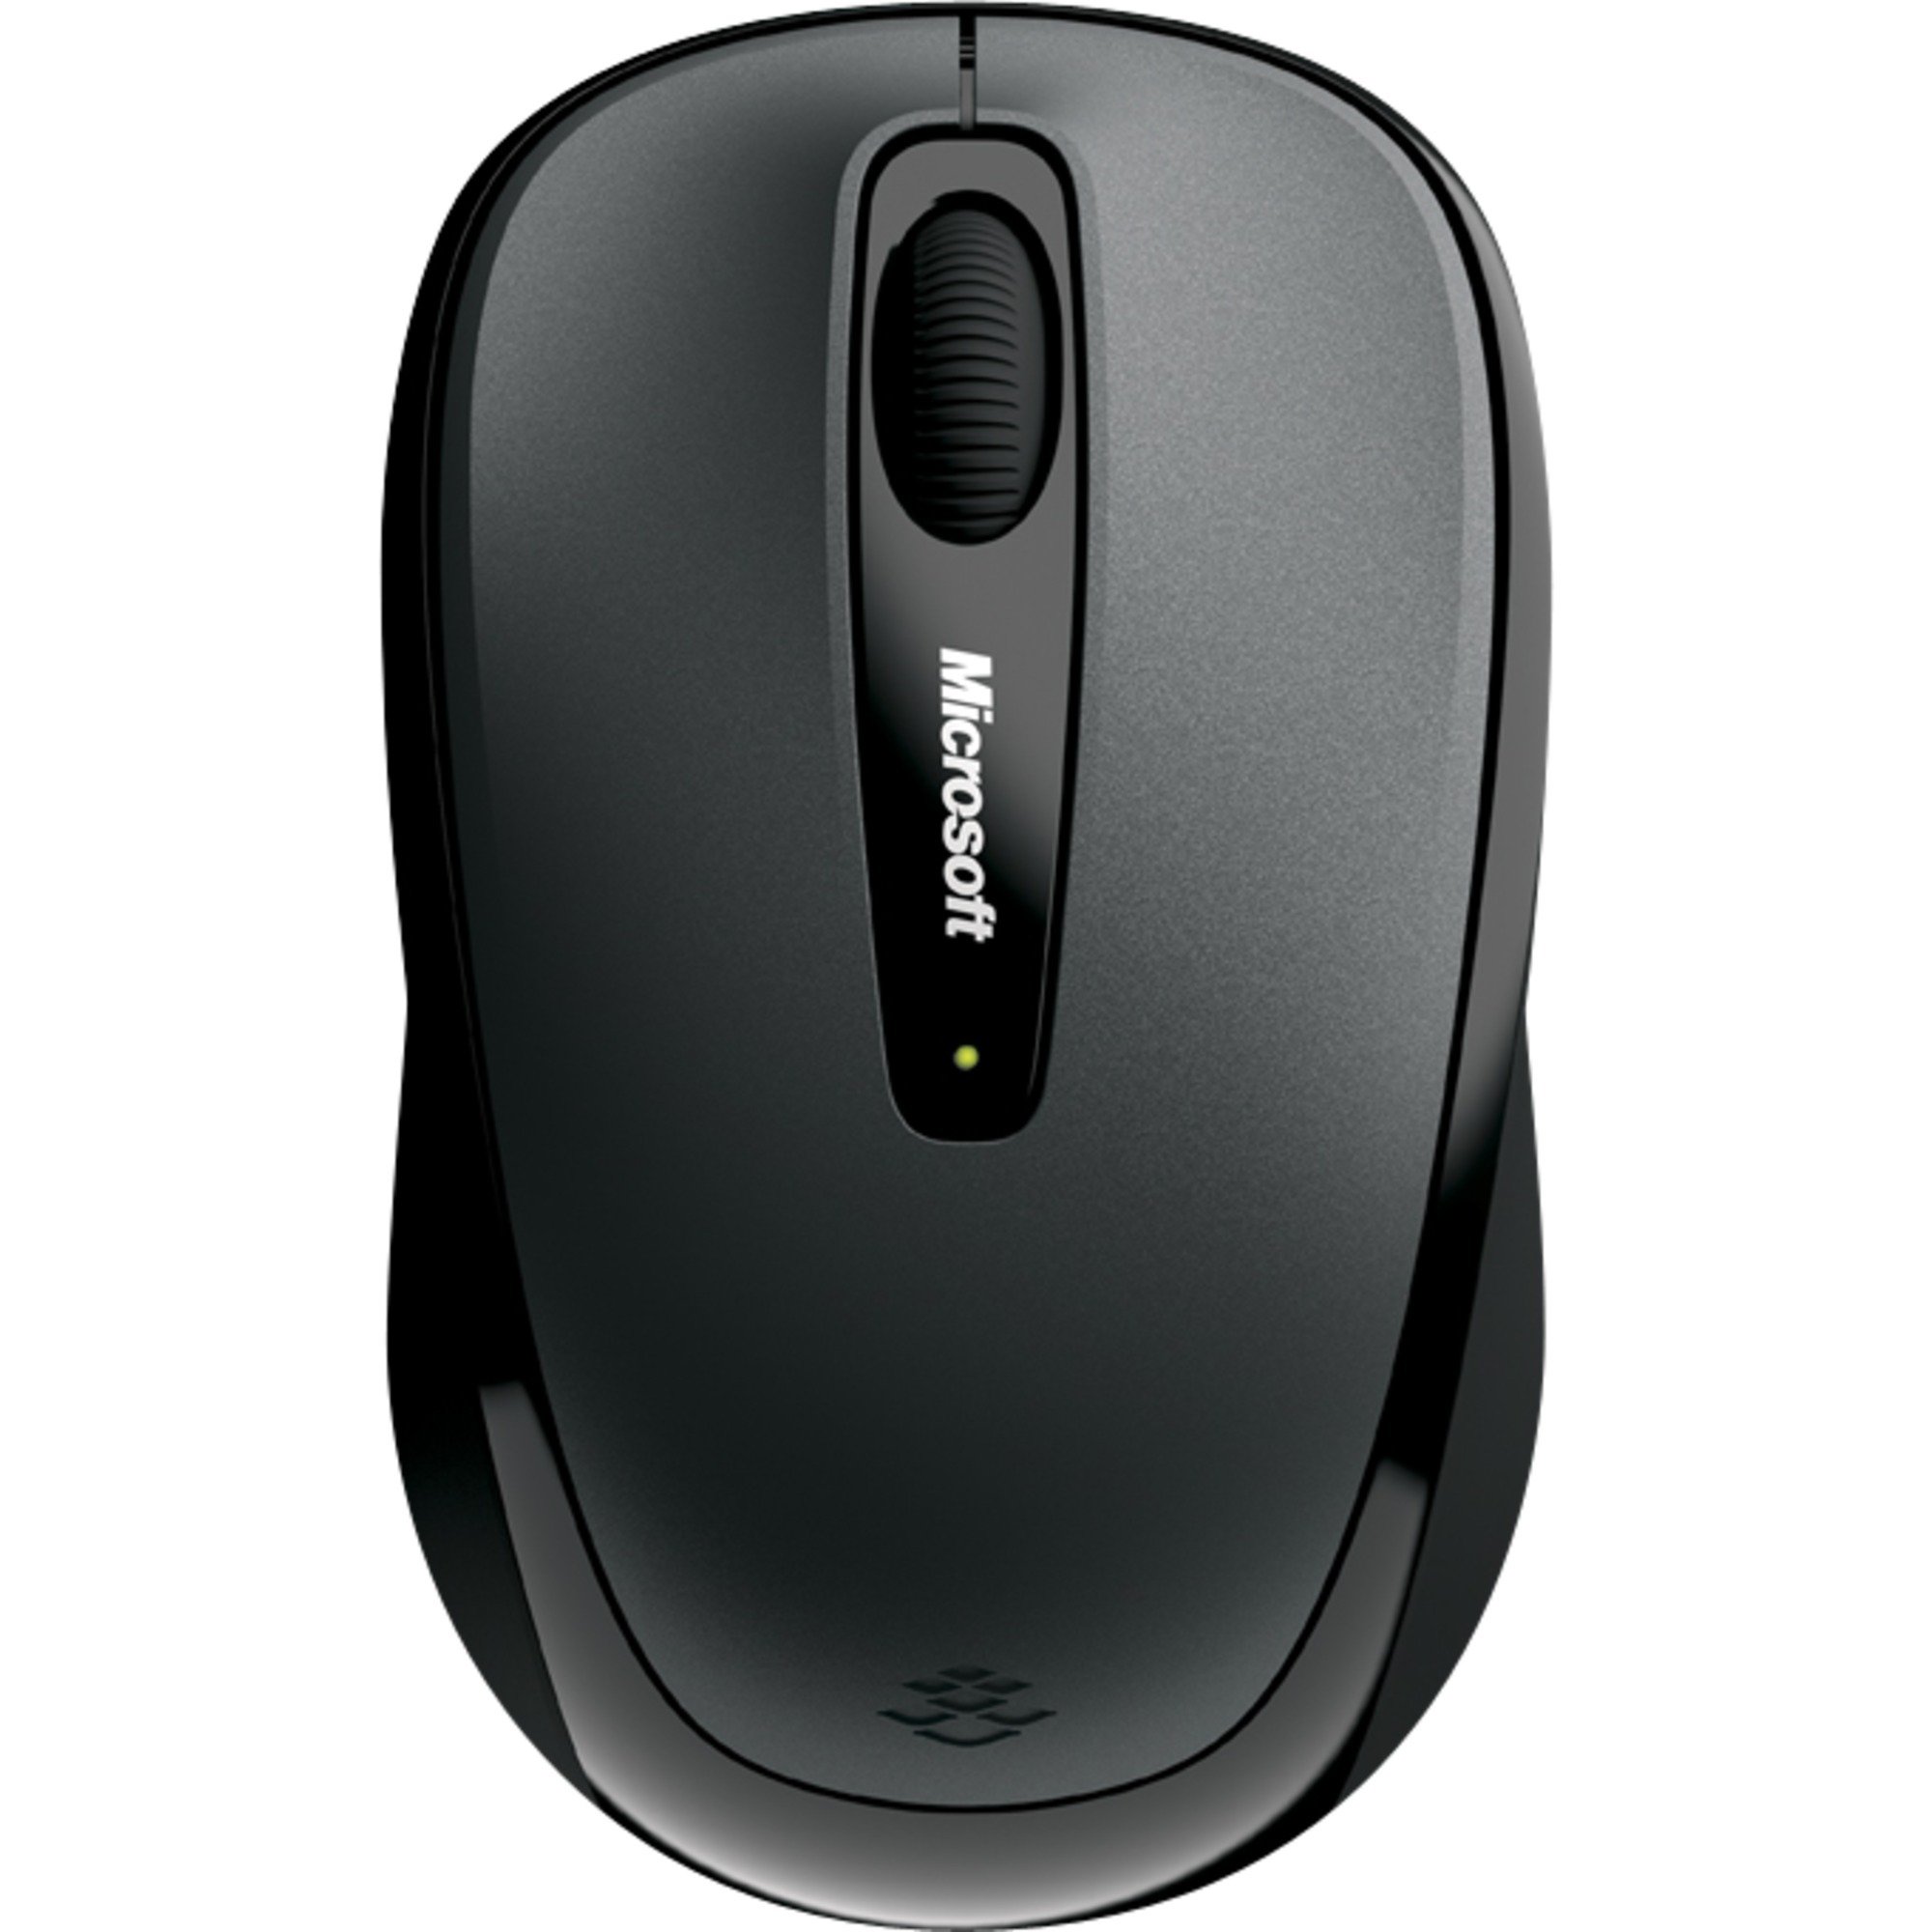 Image of Alternate - Wireless Mobile Mouse 3500, Maus online einkaufen bei Alternate